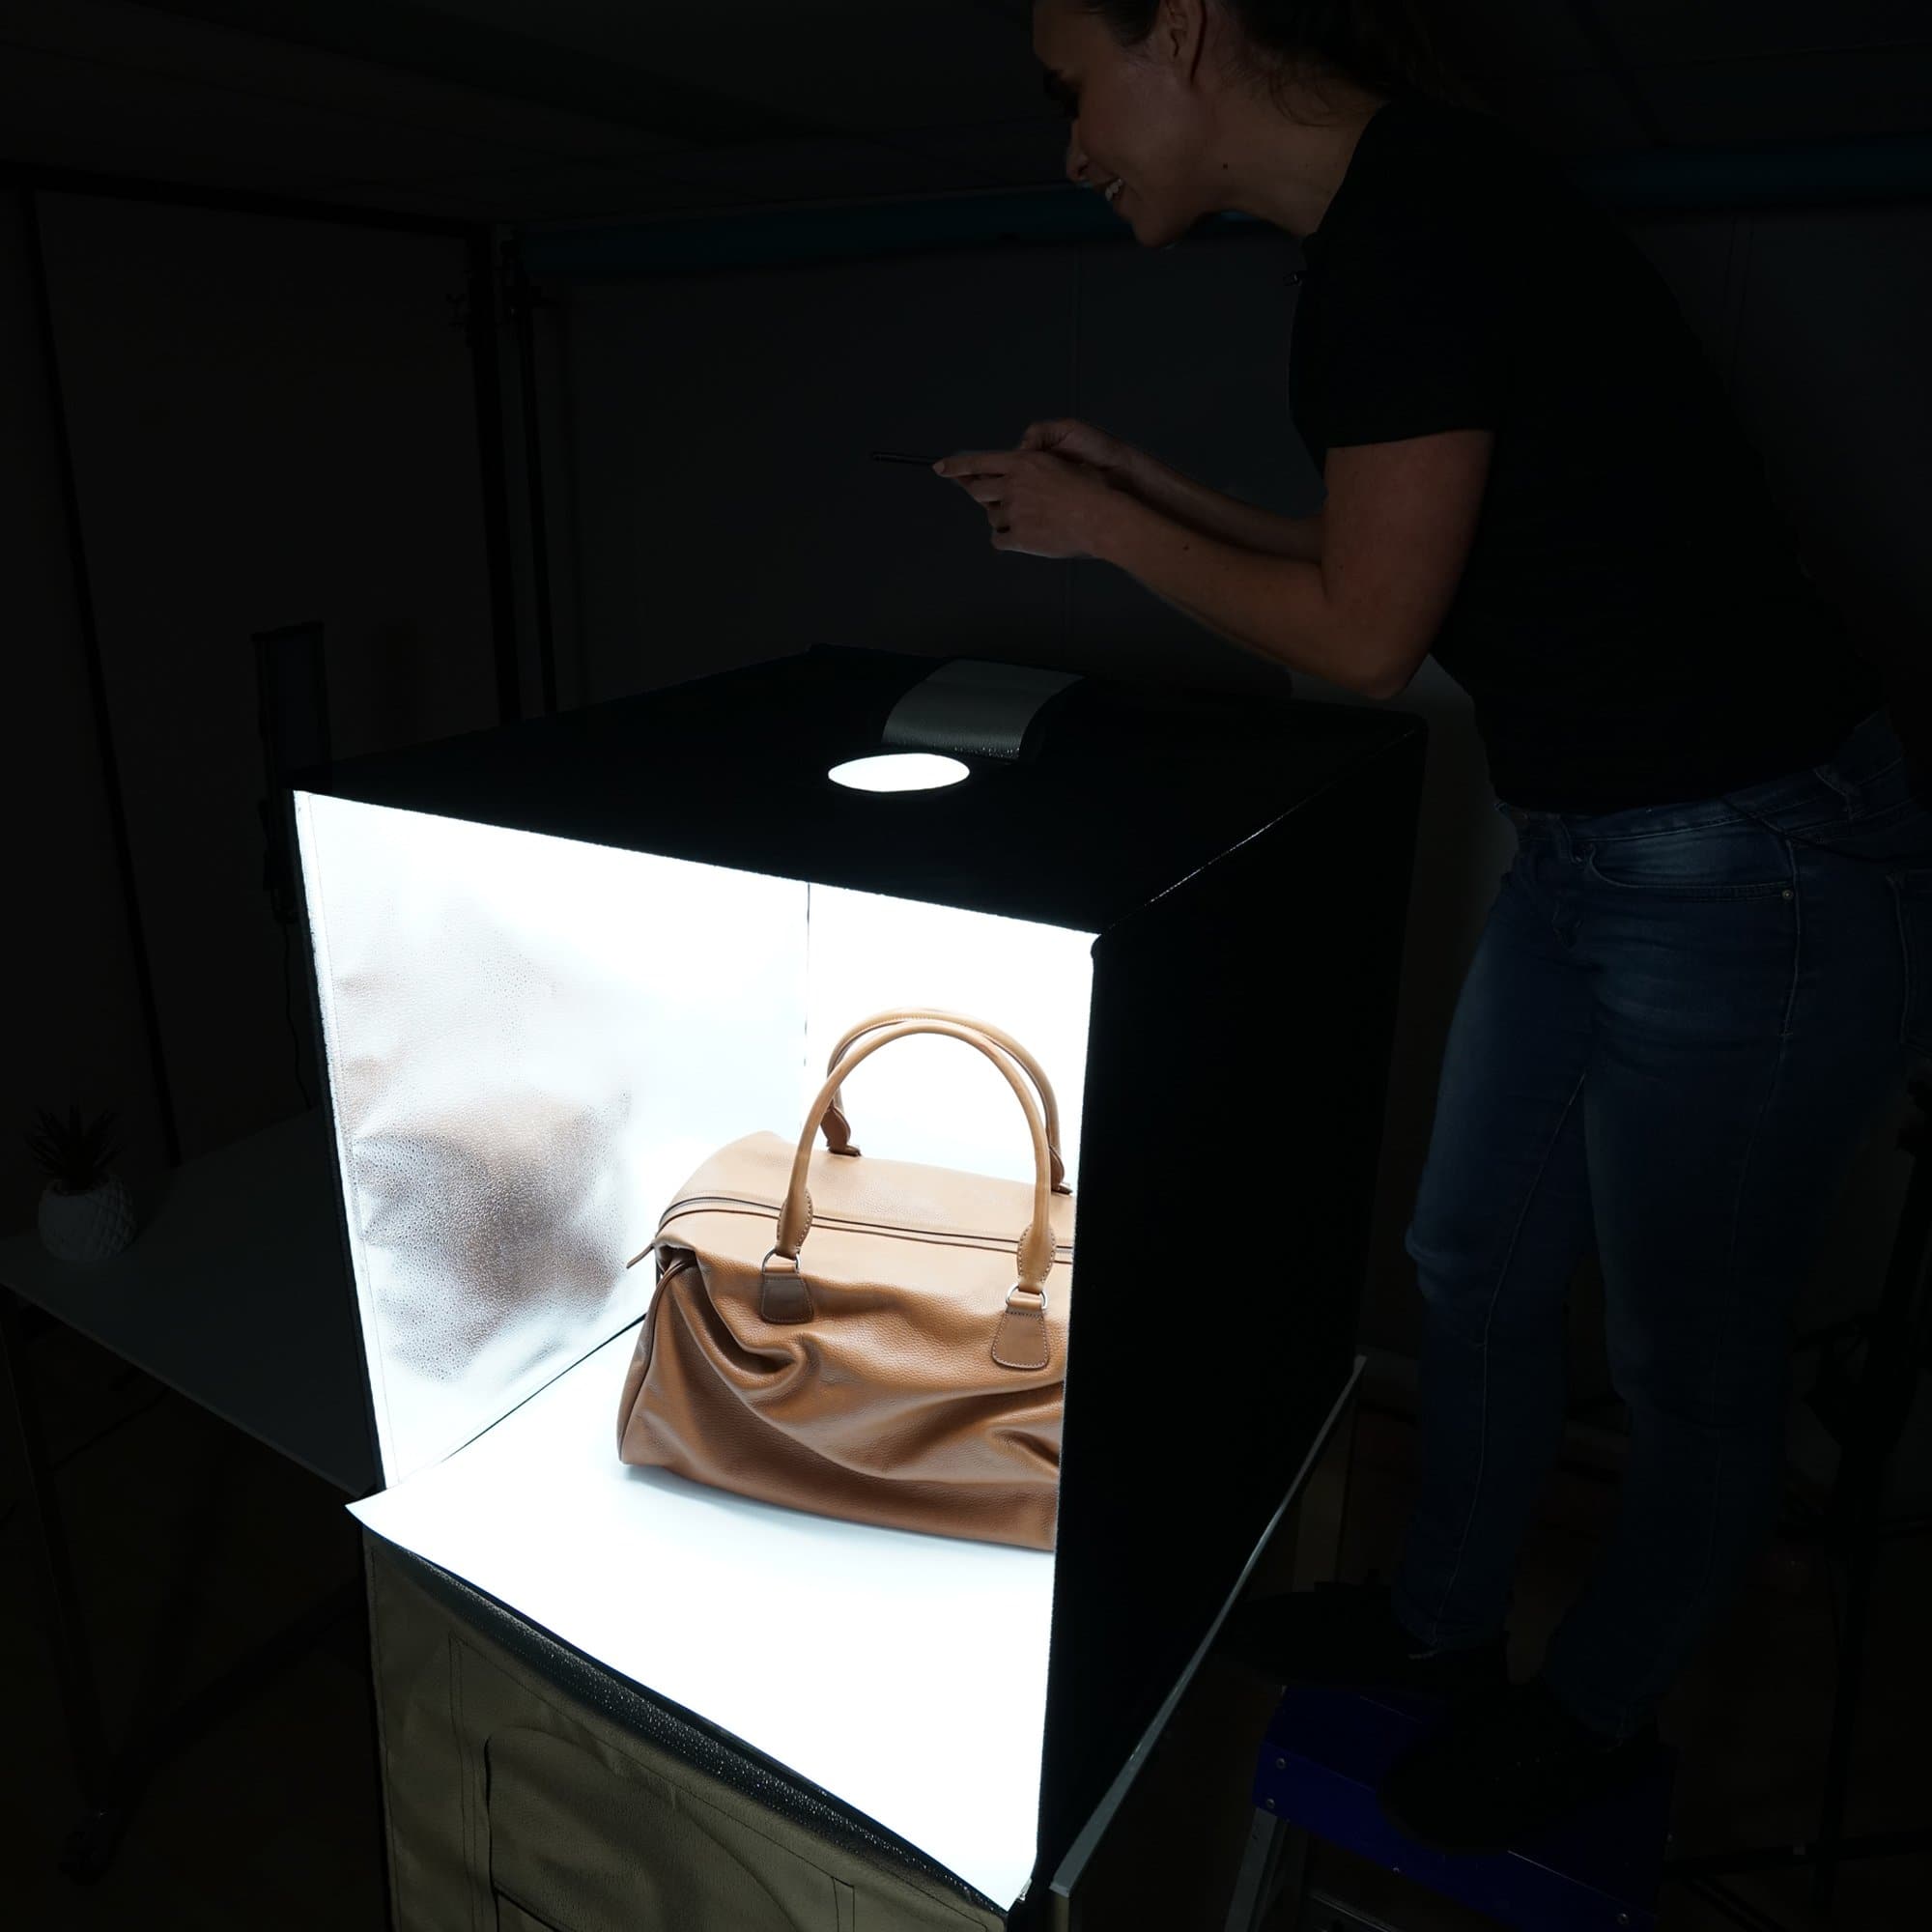 Tent 'STUDIO BUDDY' 31 Inch Foldable Product Photography LED Lighting Box